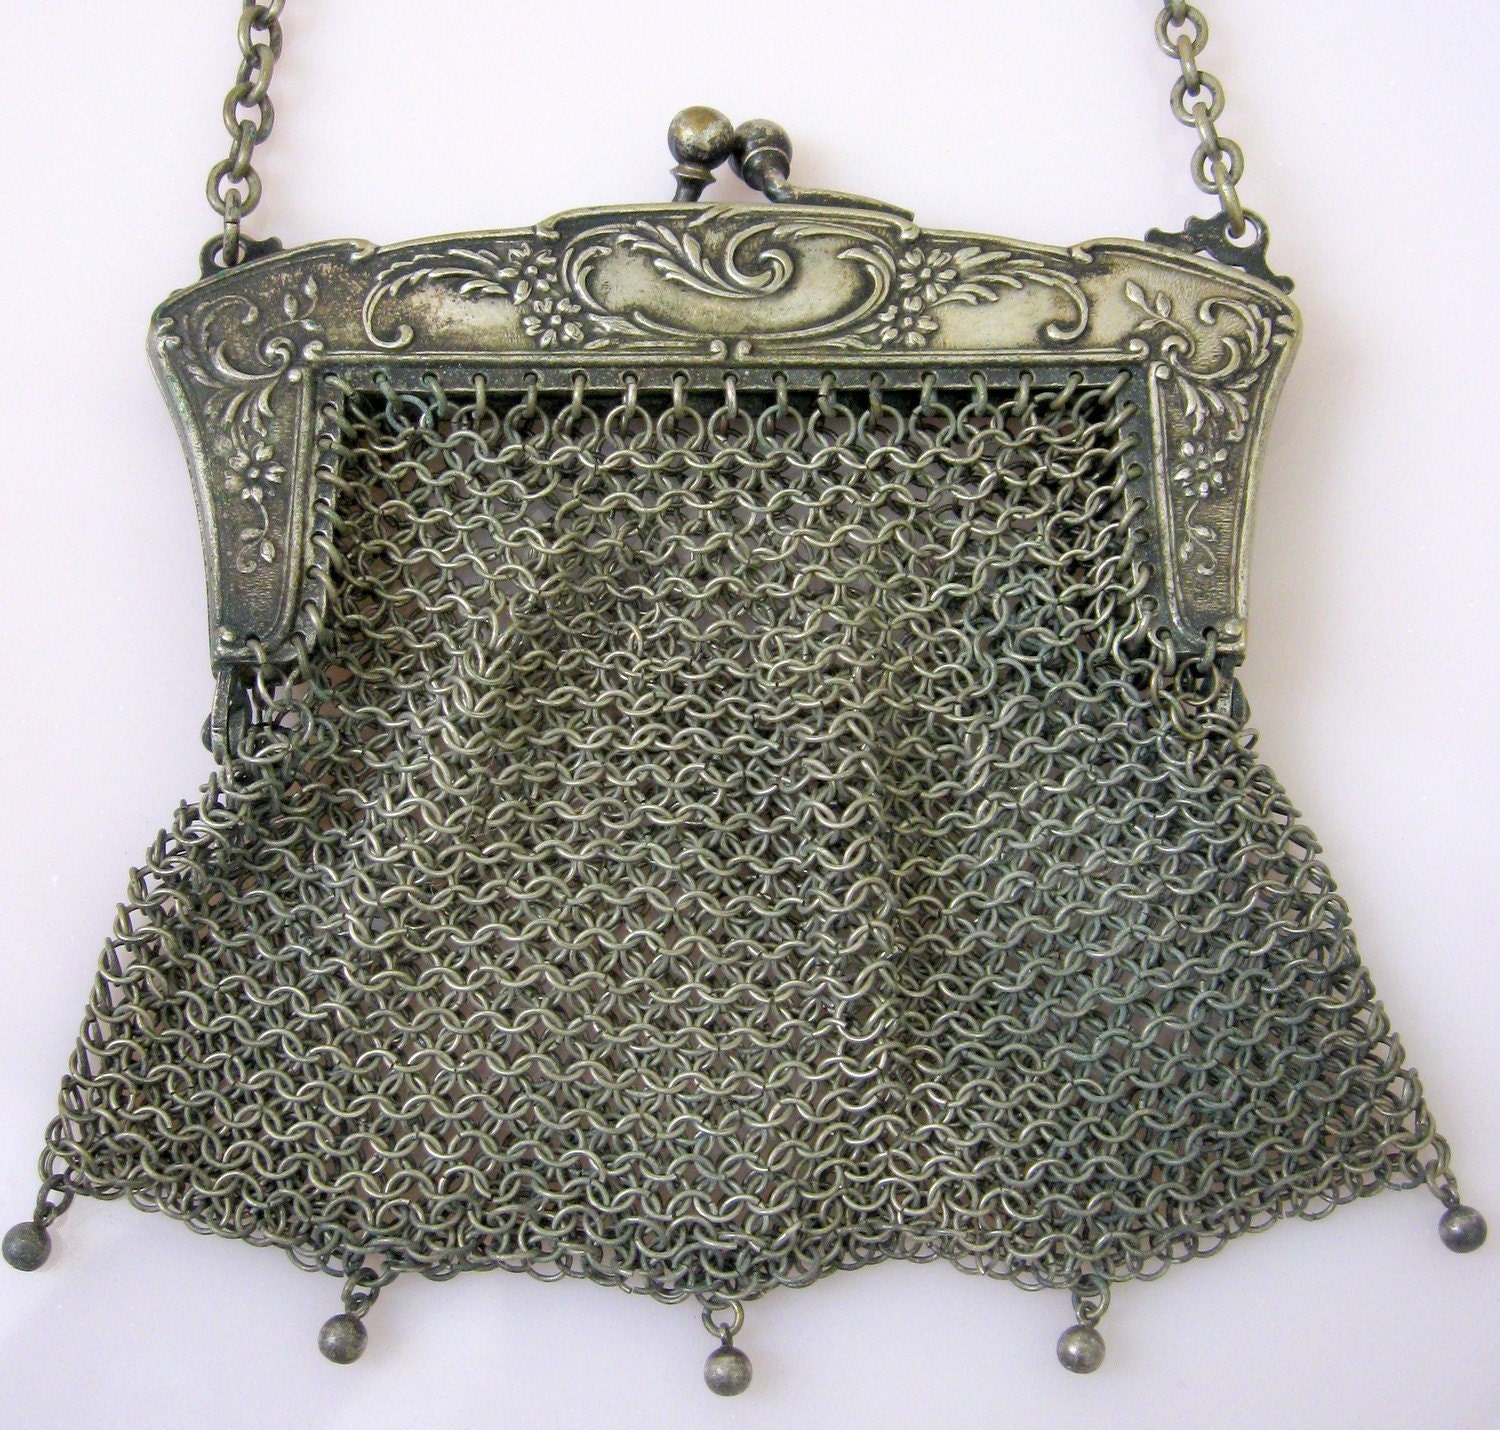 Antique German Silver Mesh Purse Evening Bag by Somethingcharming